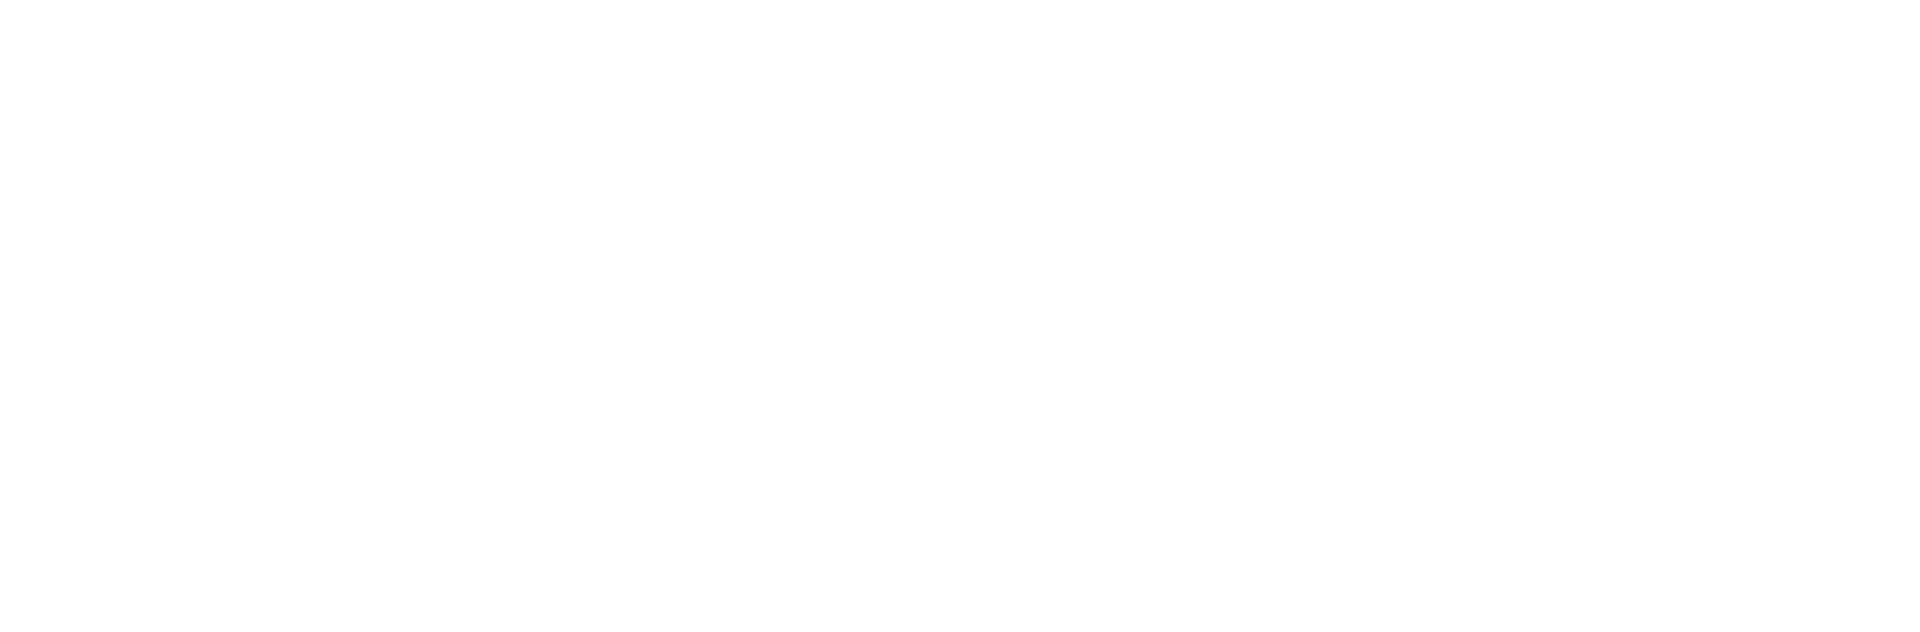 RMAE - Rocky Mountain Association of Entrepreneurs